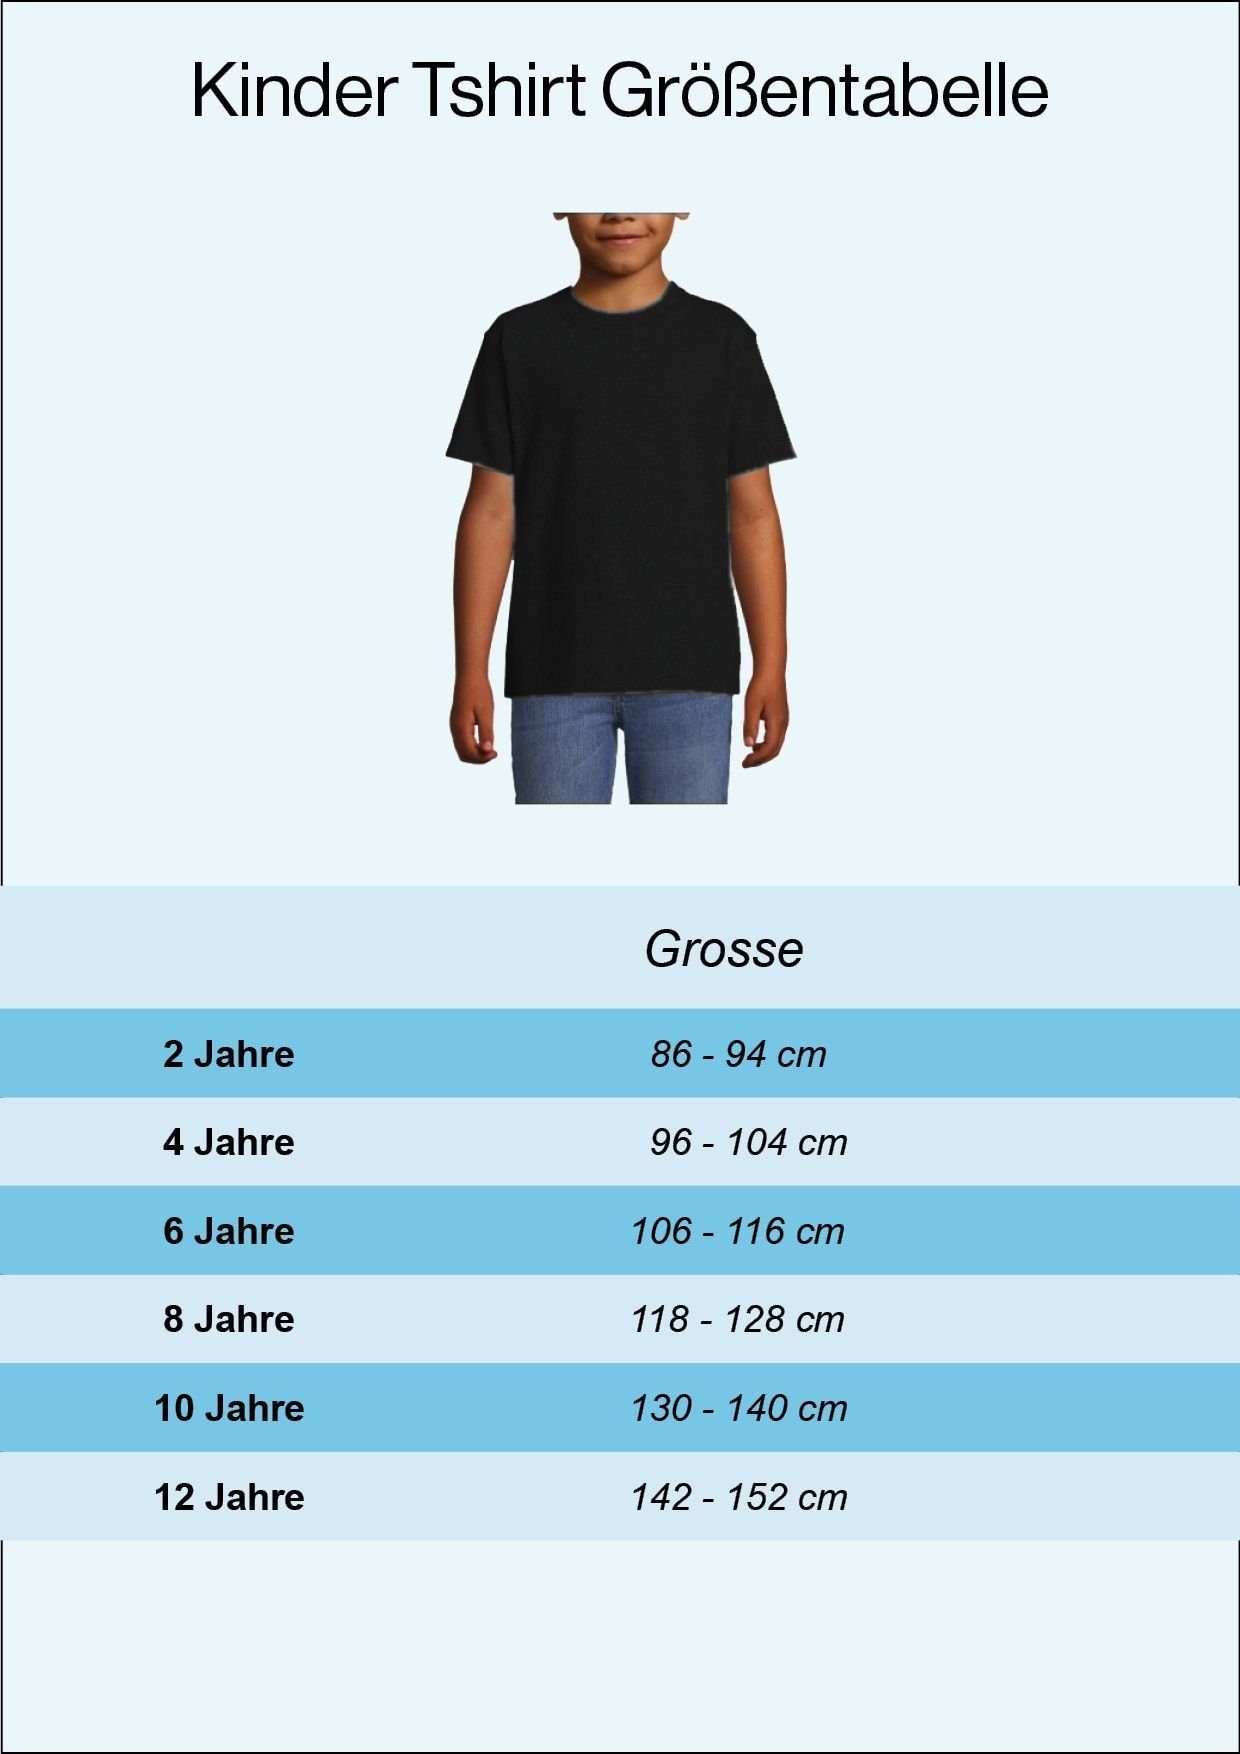 Designz Youth Kinder Frontprint T-Shirt Weiss mit Mücke63 T-Shirt Trendigem